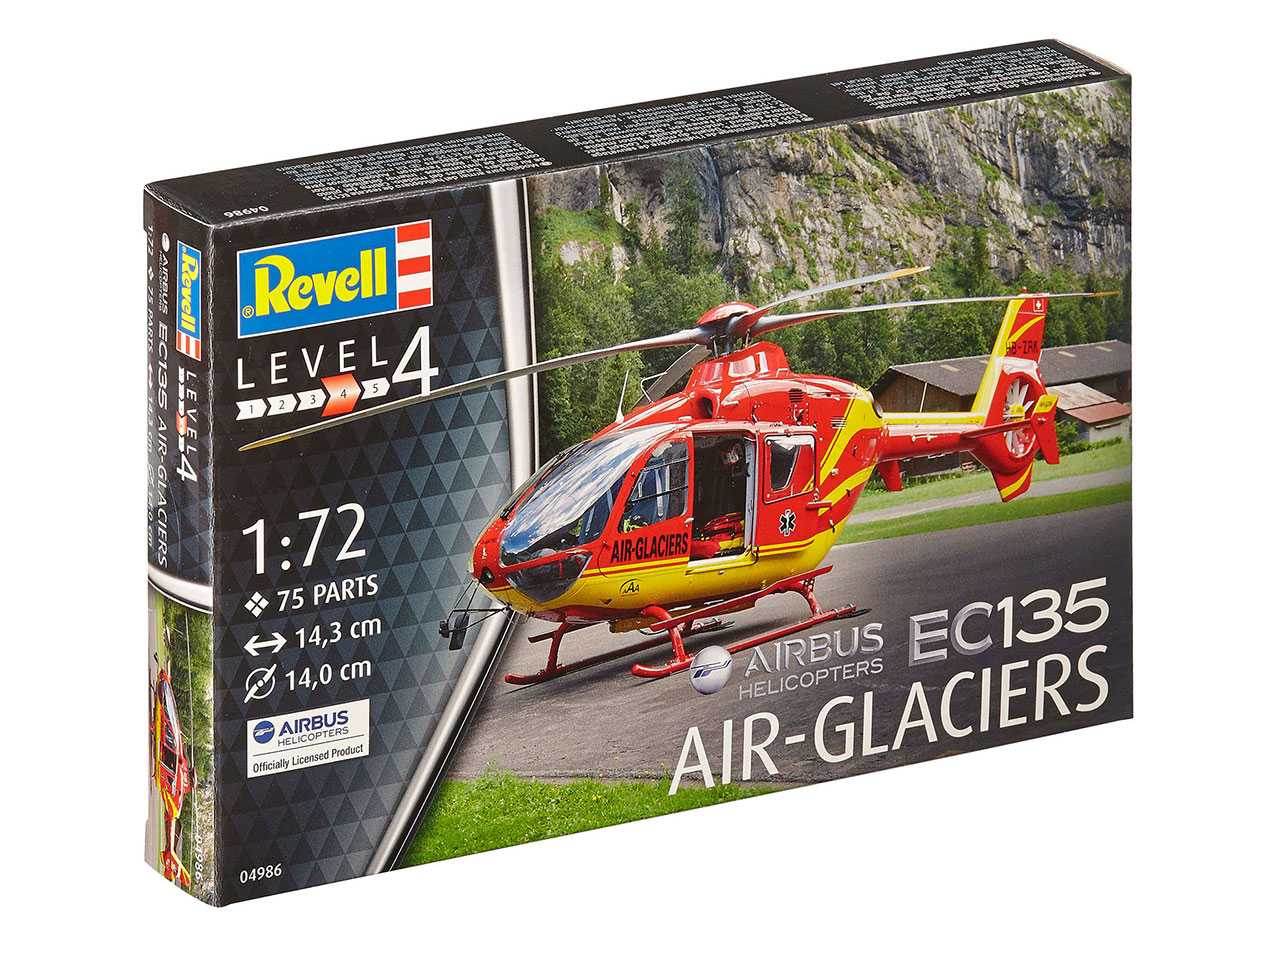 Fotografie Plastic ModelKit vrtulník 04986 - EC 135 Air Glaciers (1:72)